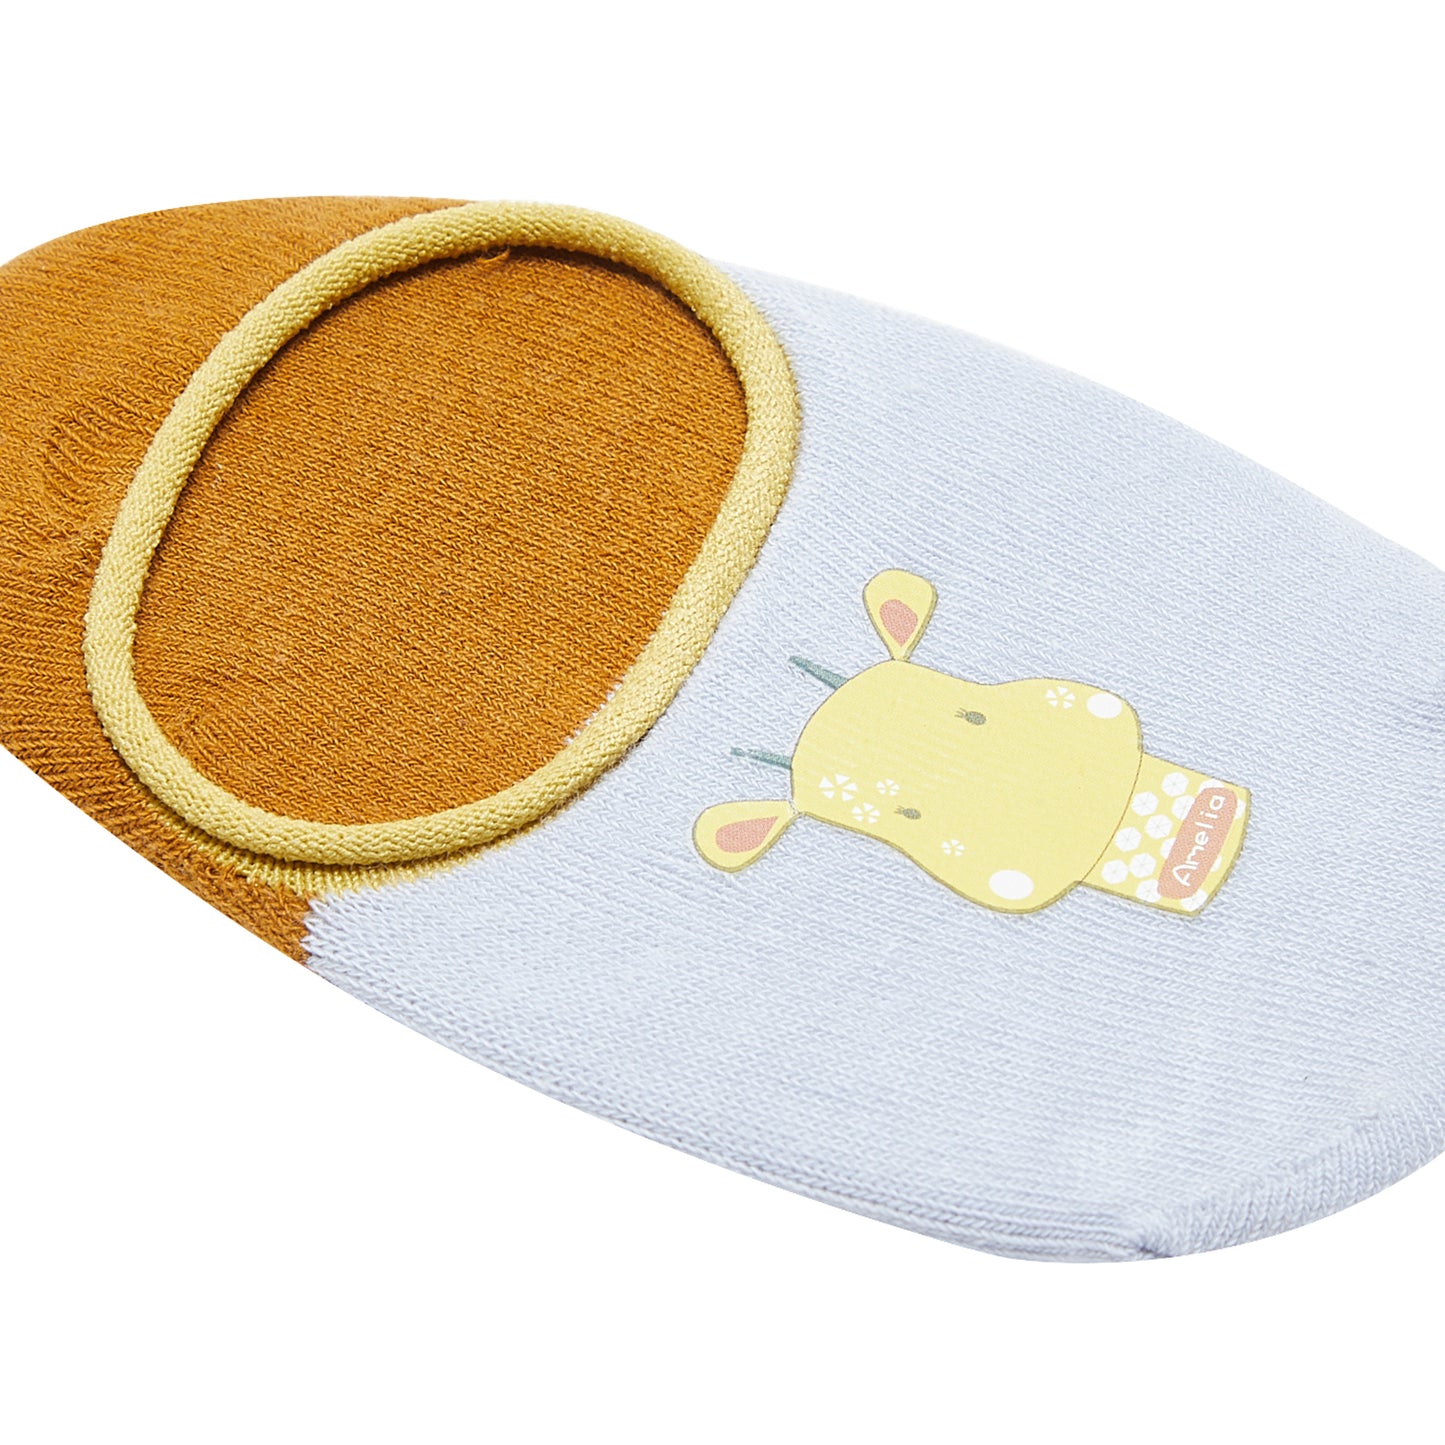 Tiny Alpaca Kids Animal Print Ankle Socks - IDENTITY Apparel Shop